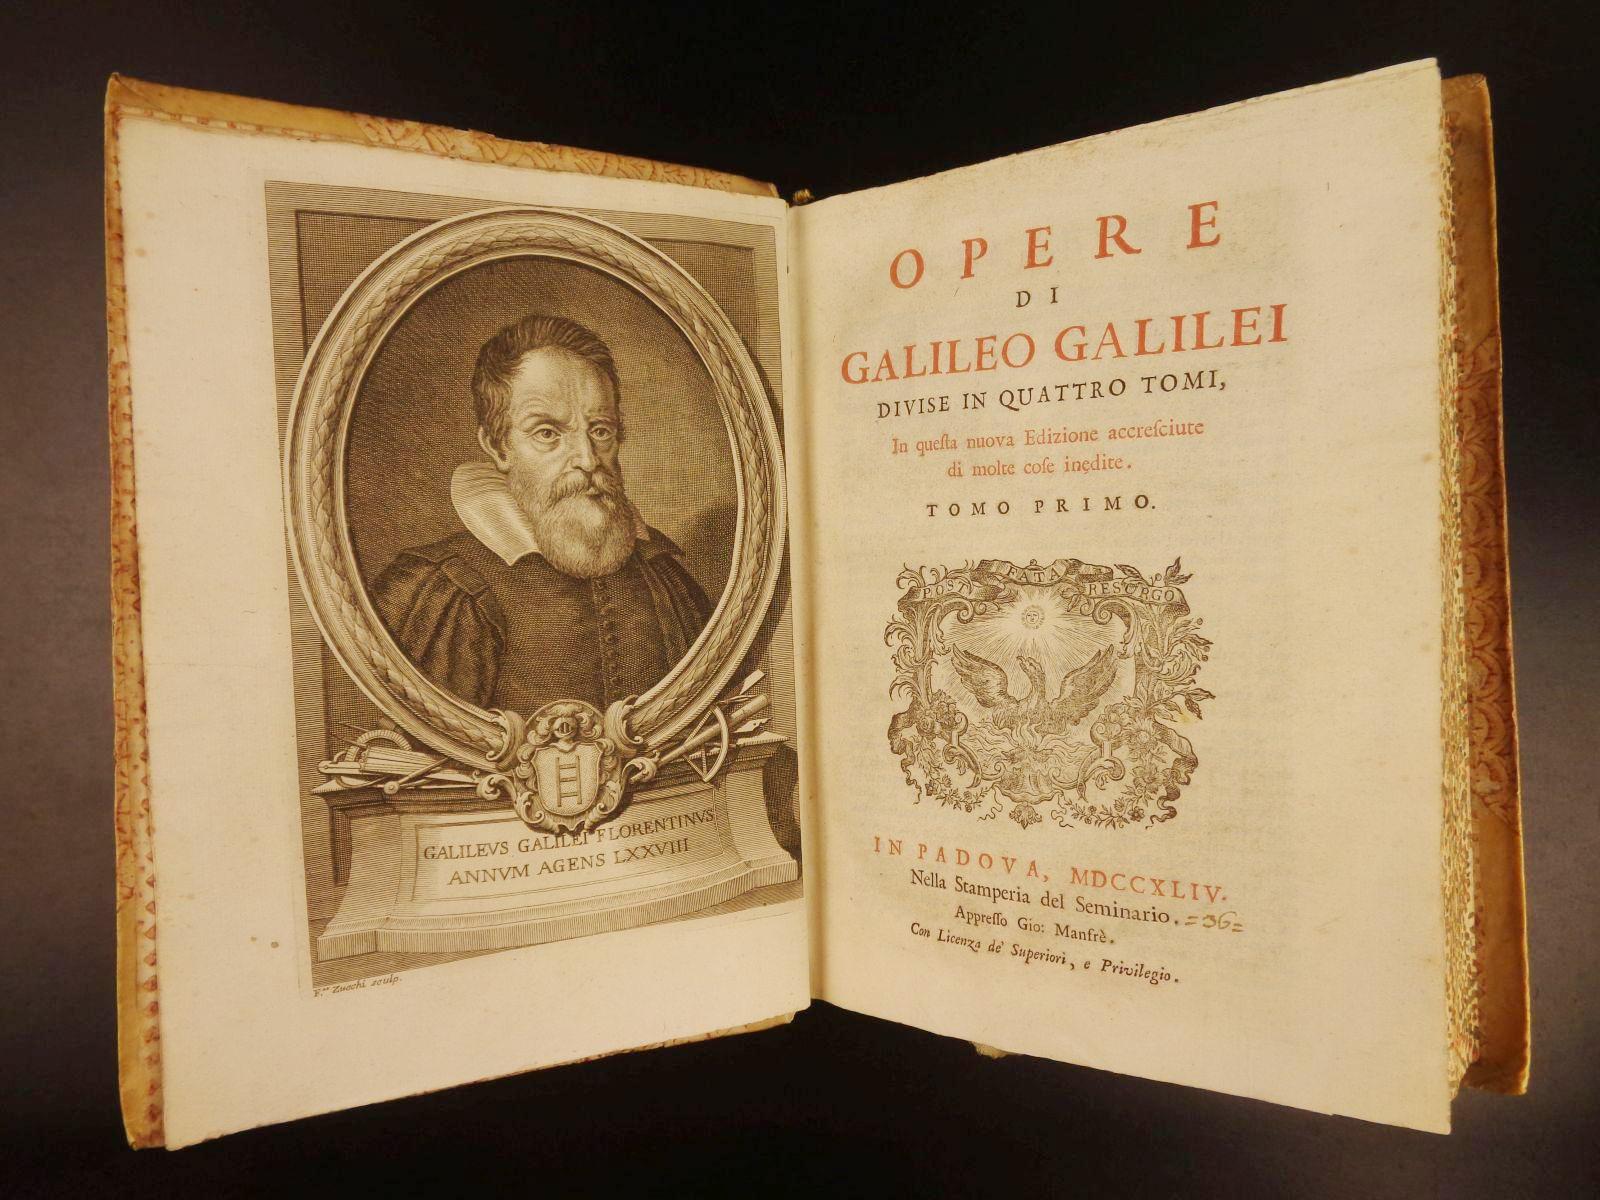 Galileo Galilei had good human nature